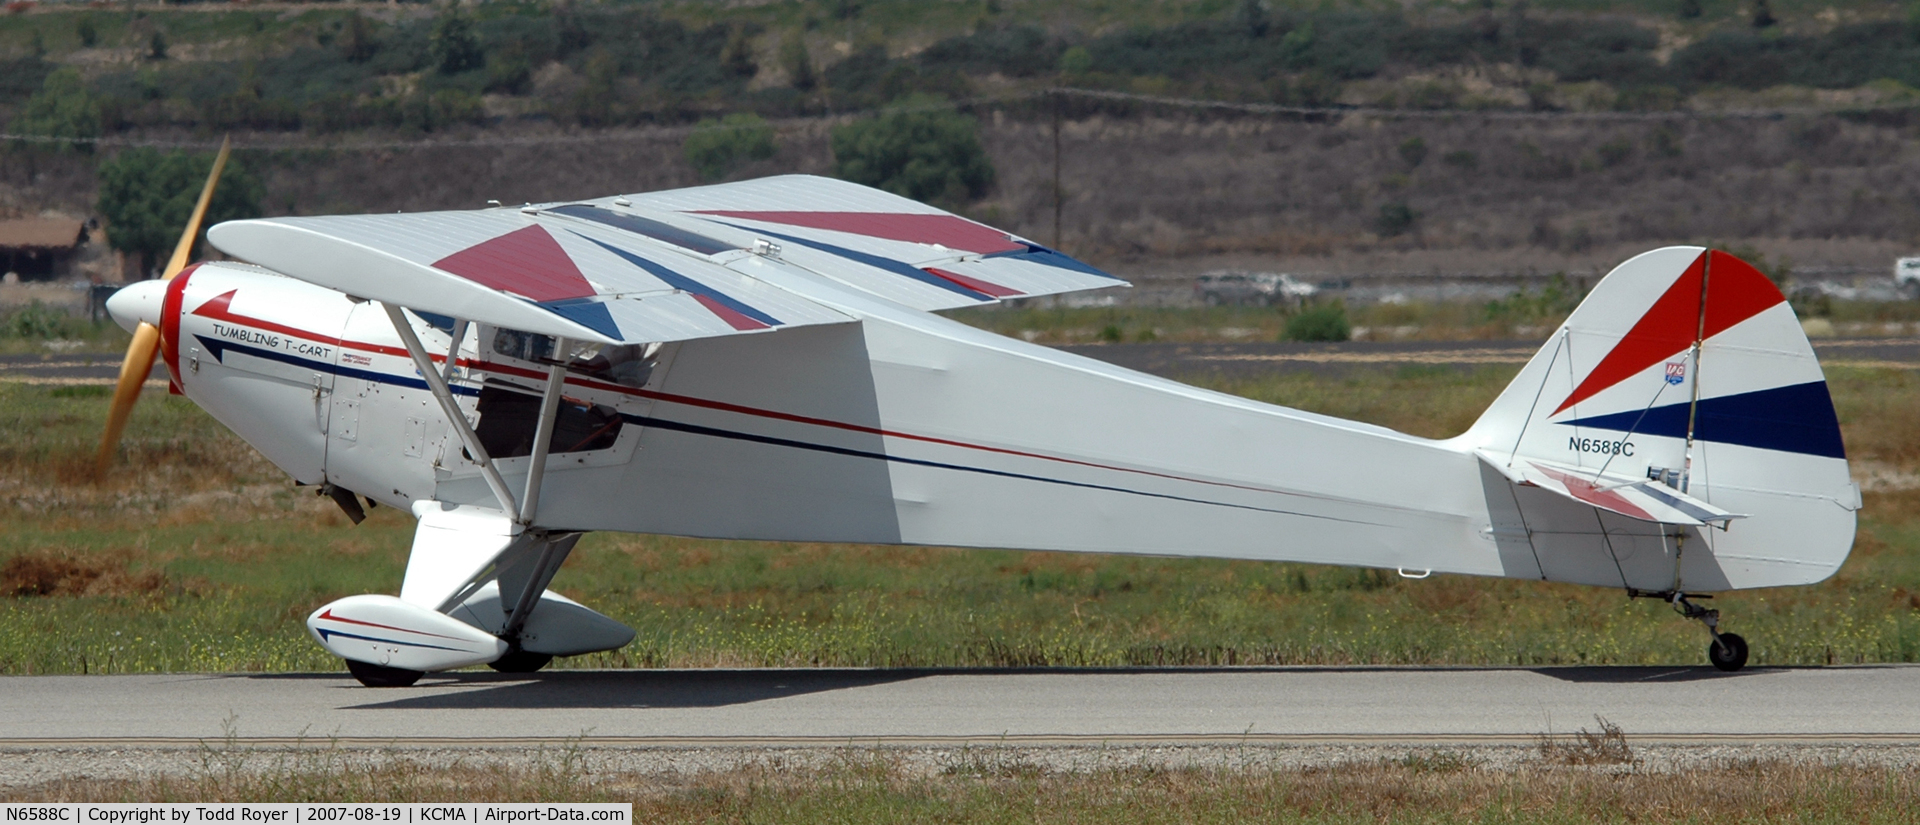 N6588C, 1992 Taylorcraft/Swick T-Clips C/N 1, Camarillo airshow 2007